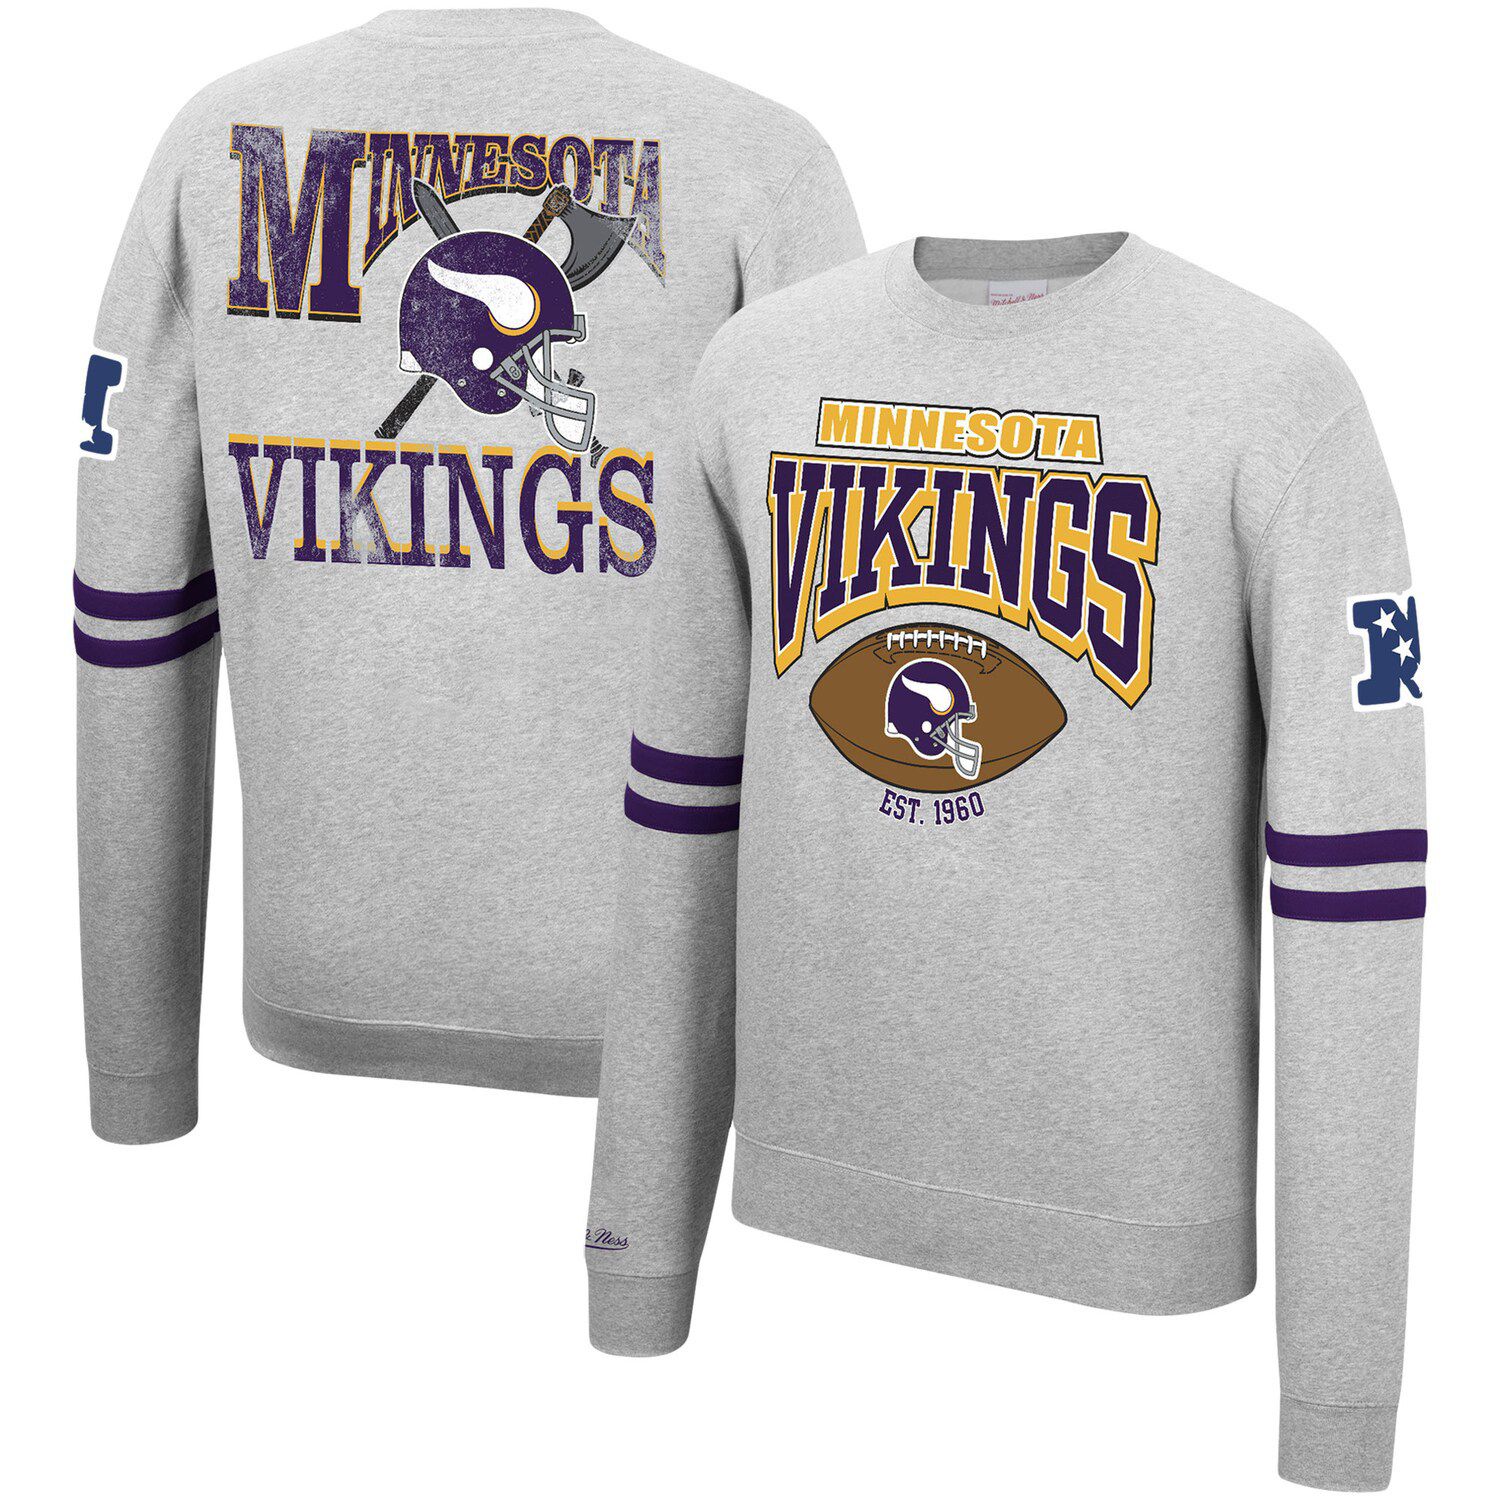 Image for Unbranded Men's Mitchell & Ness Heathered Gray Minnesota Vikings Allover Print Fleece Pullover Sweatshirt at Kohl's.